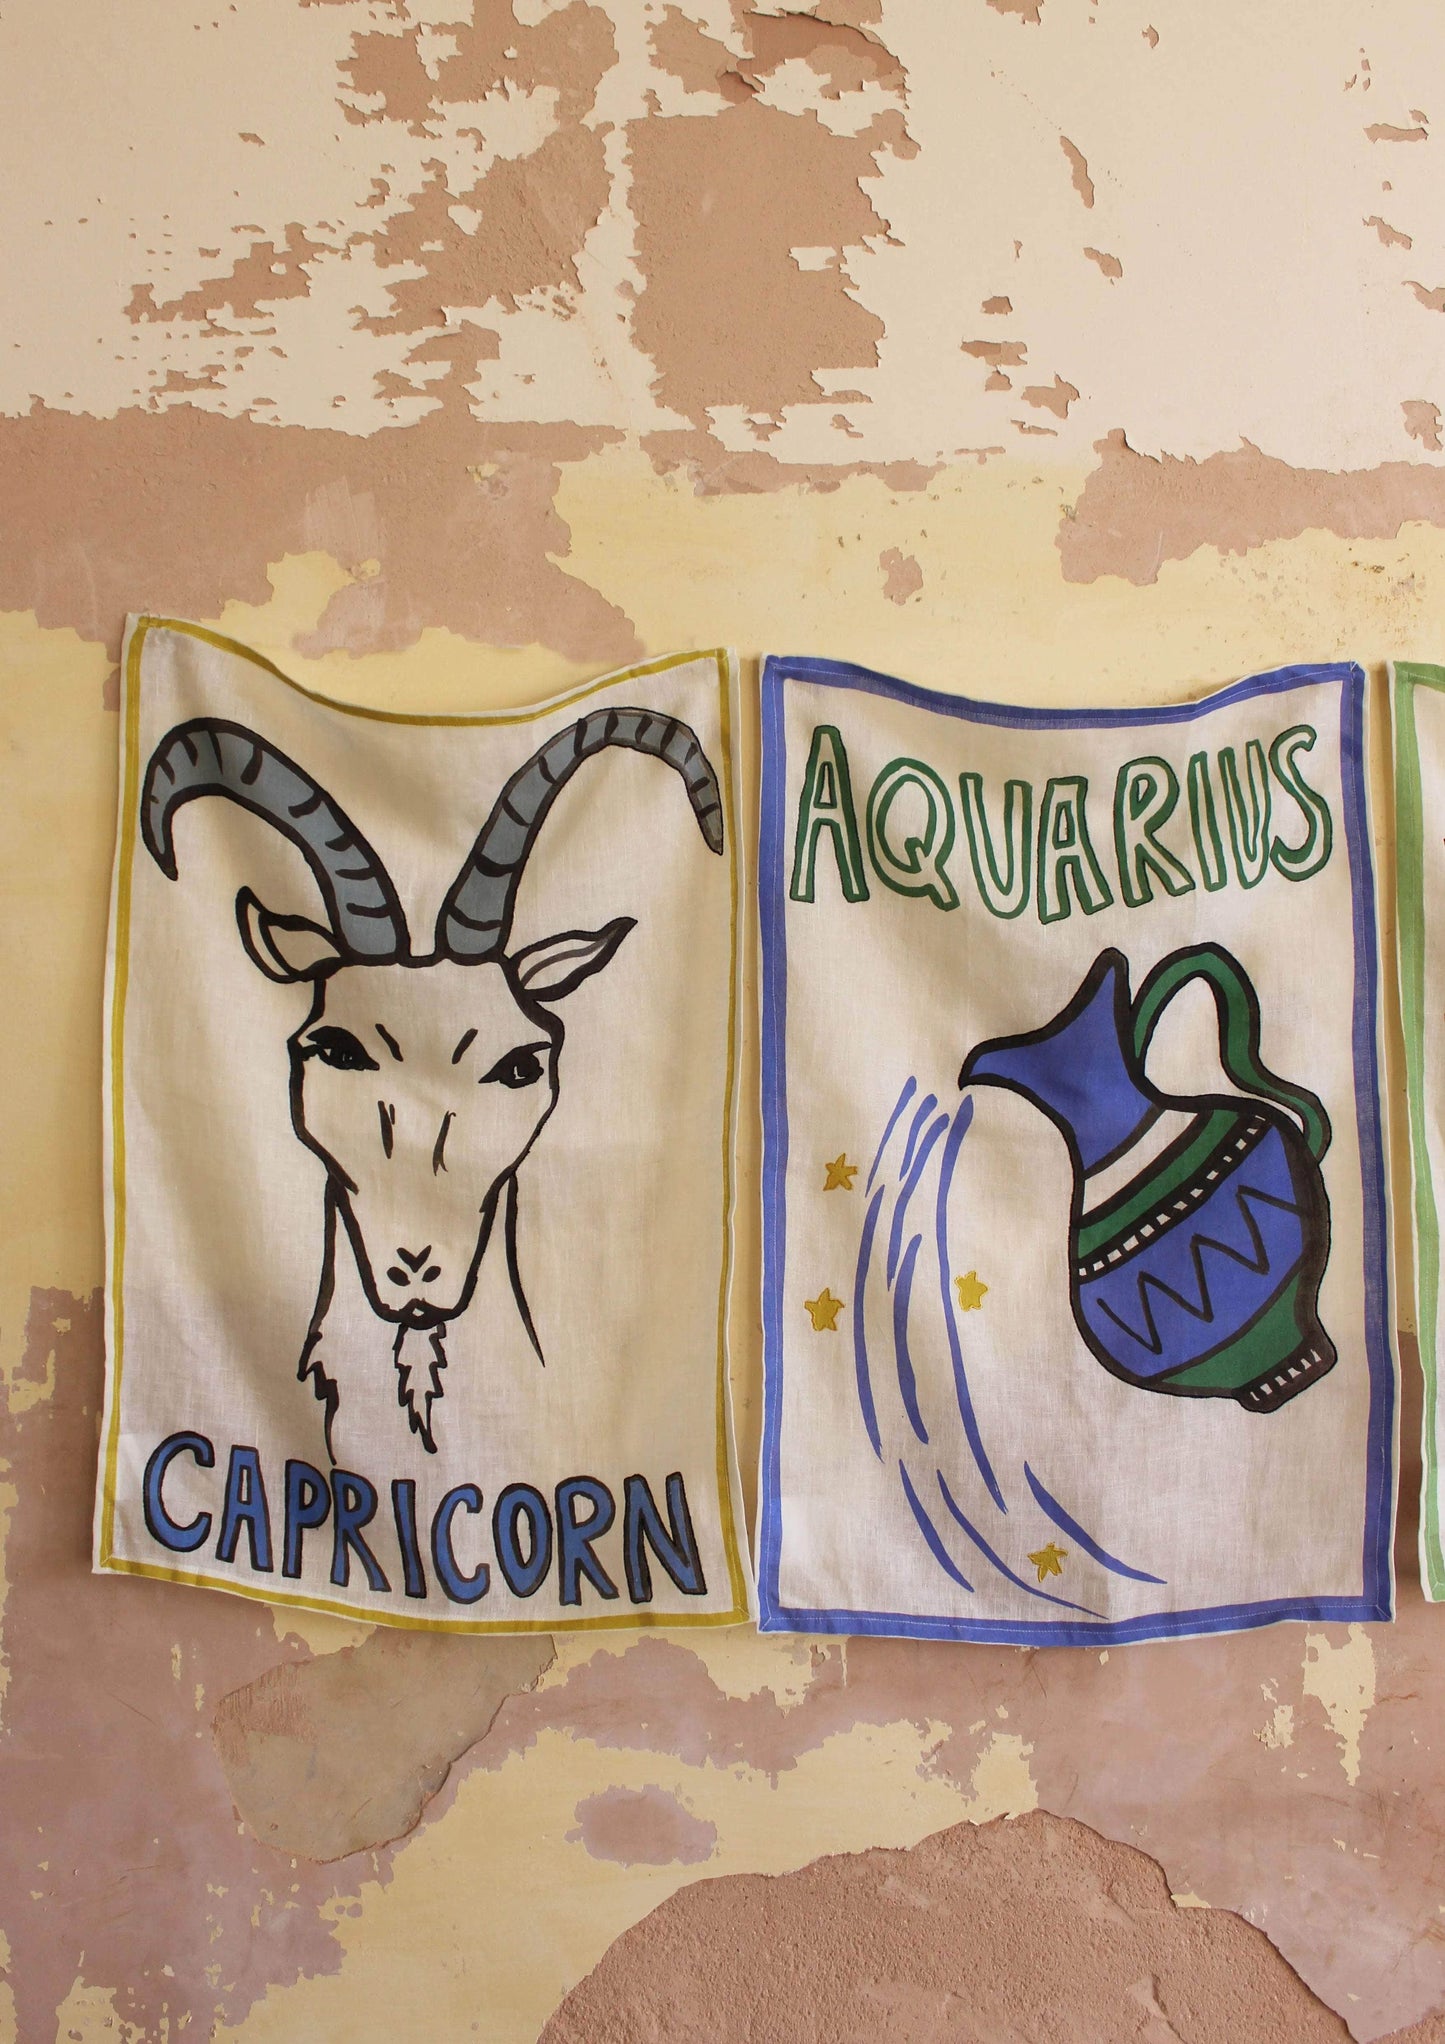 Aquarius Tea Towel